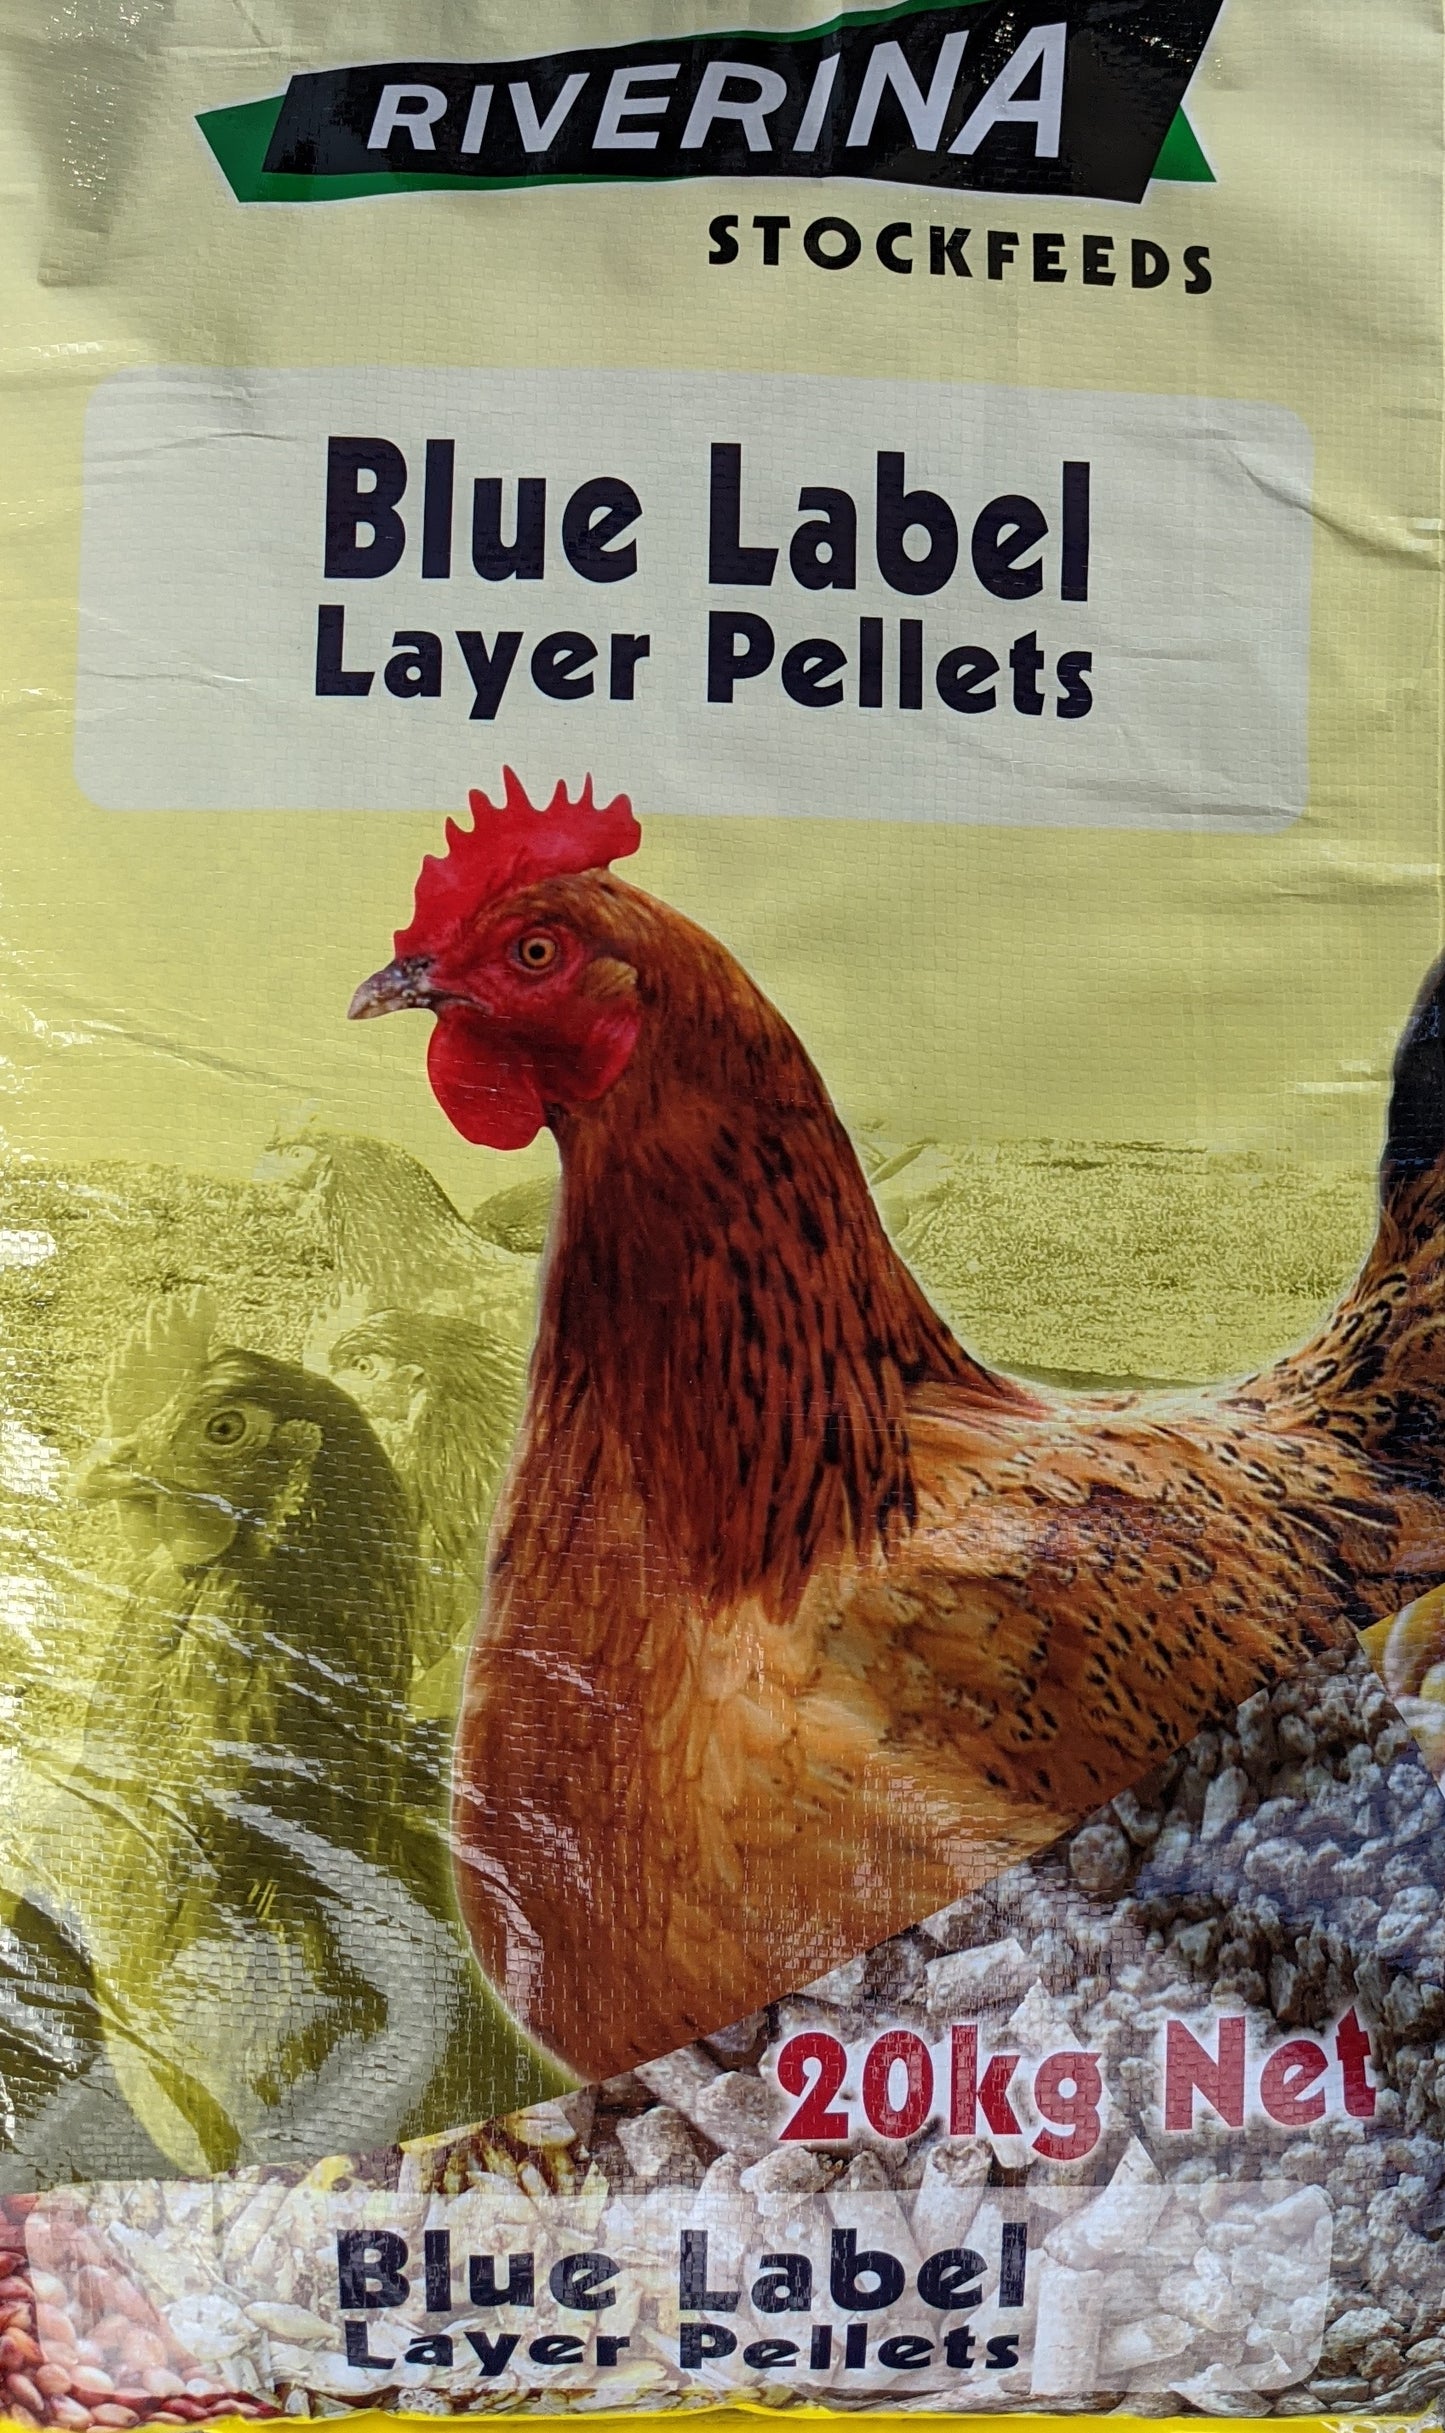 Riverina Blue Label Layer Pellets at Buckhams General Produce